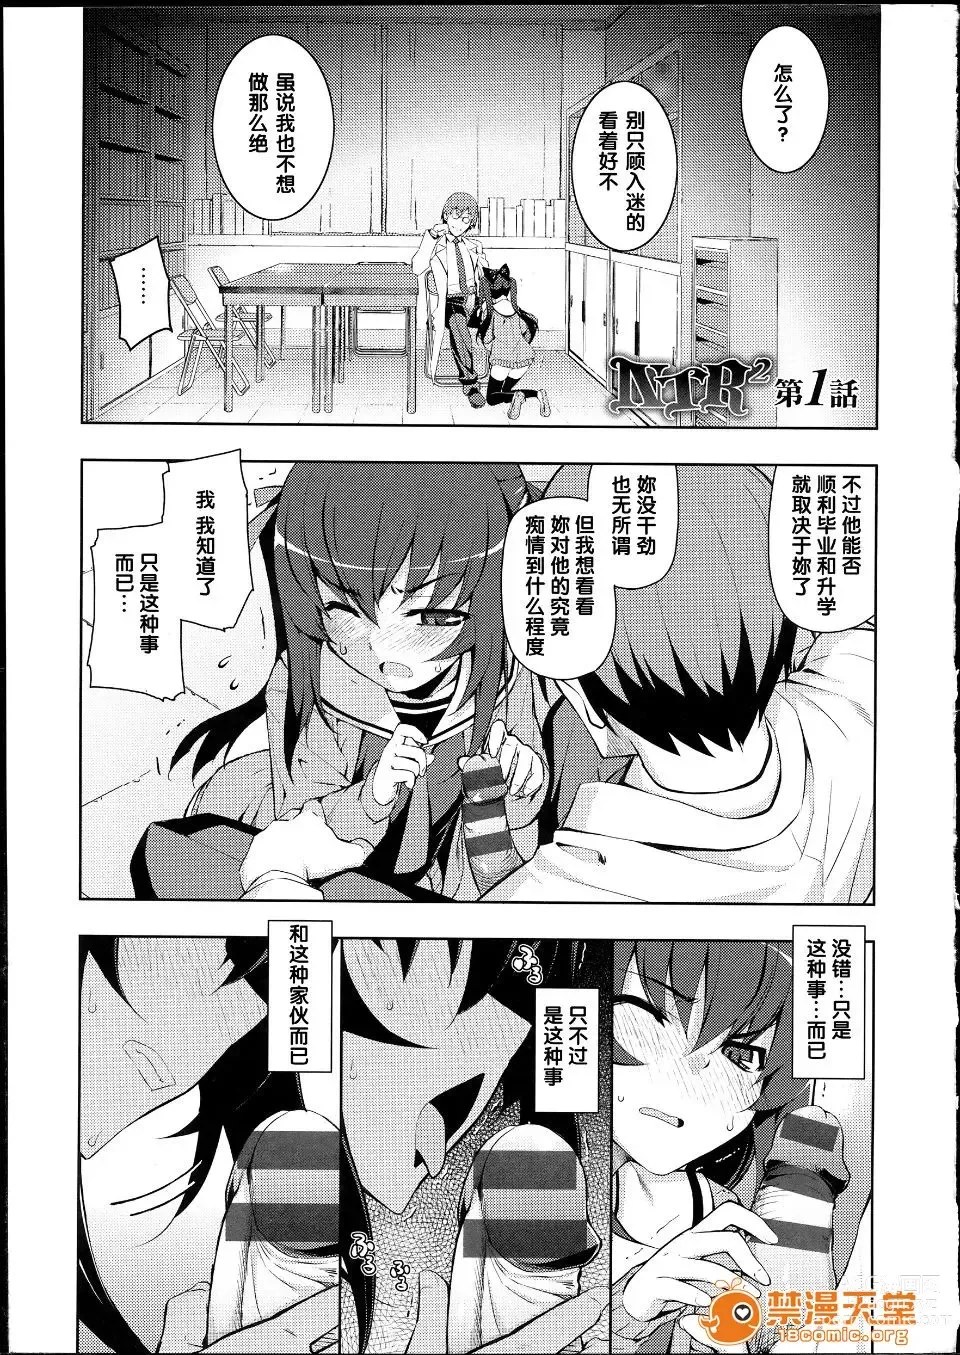 Page 7 of manga NTR²